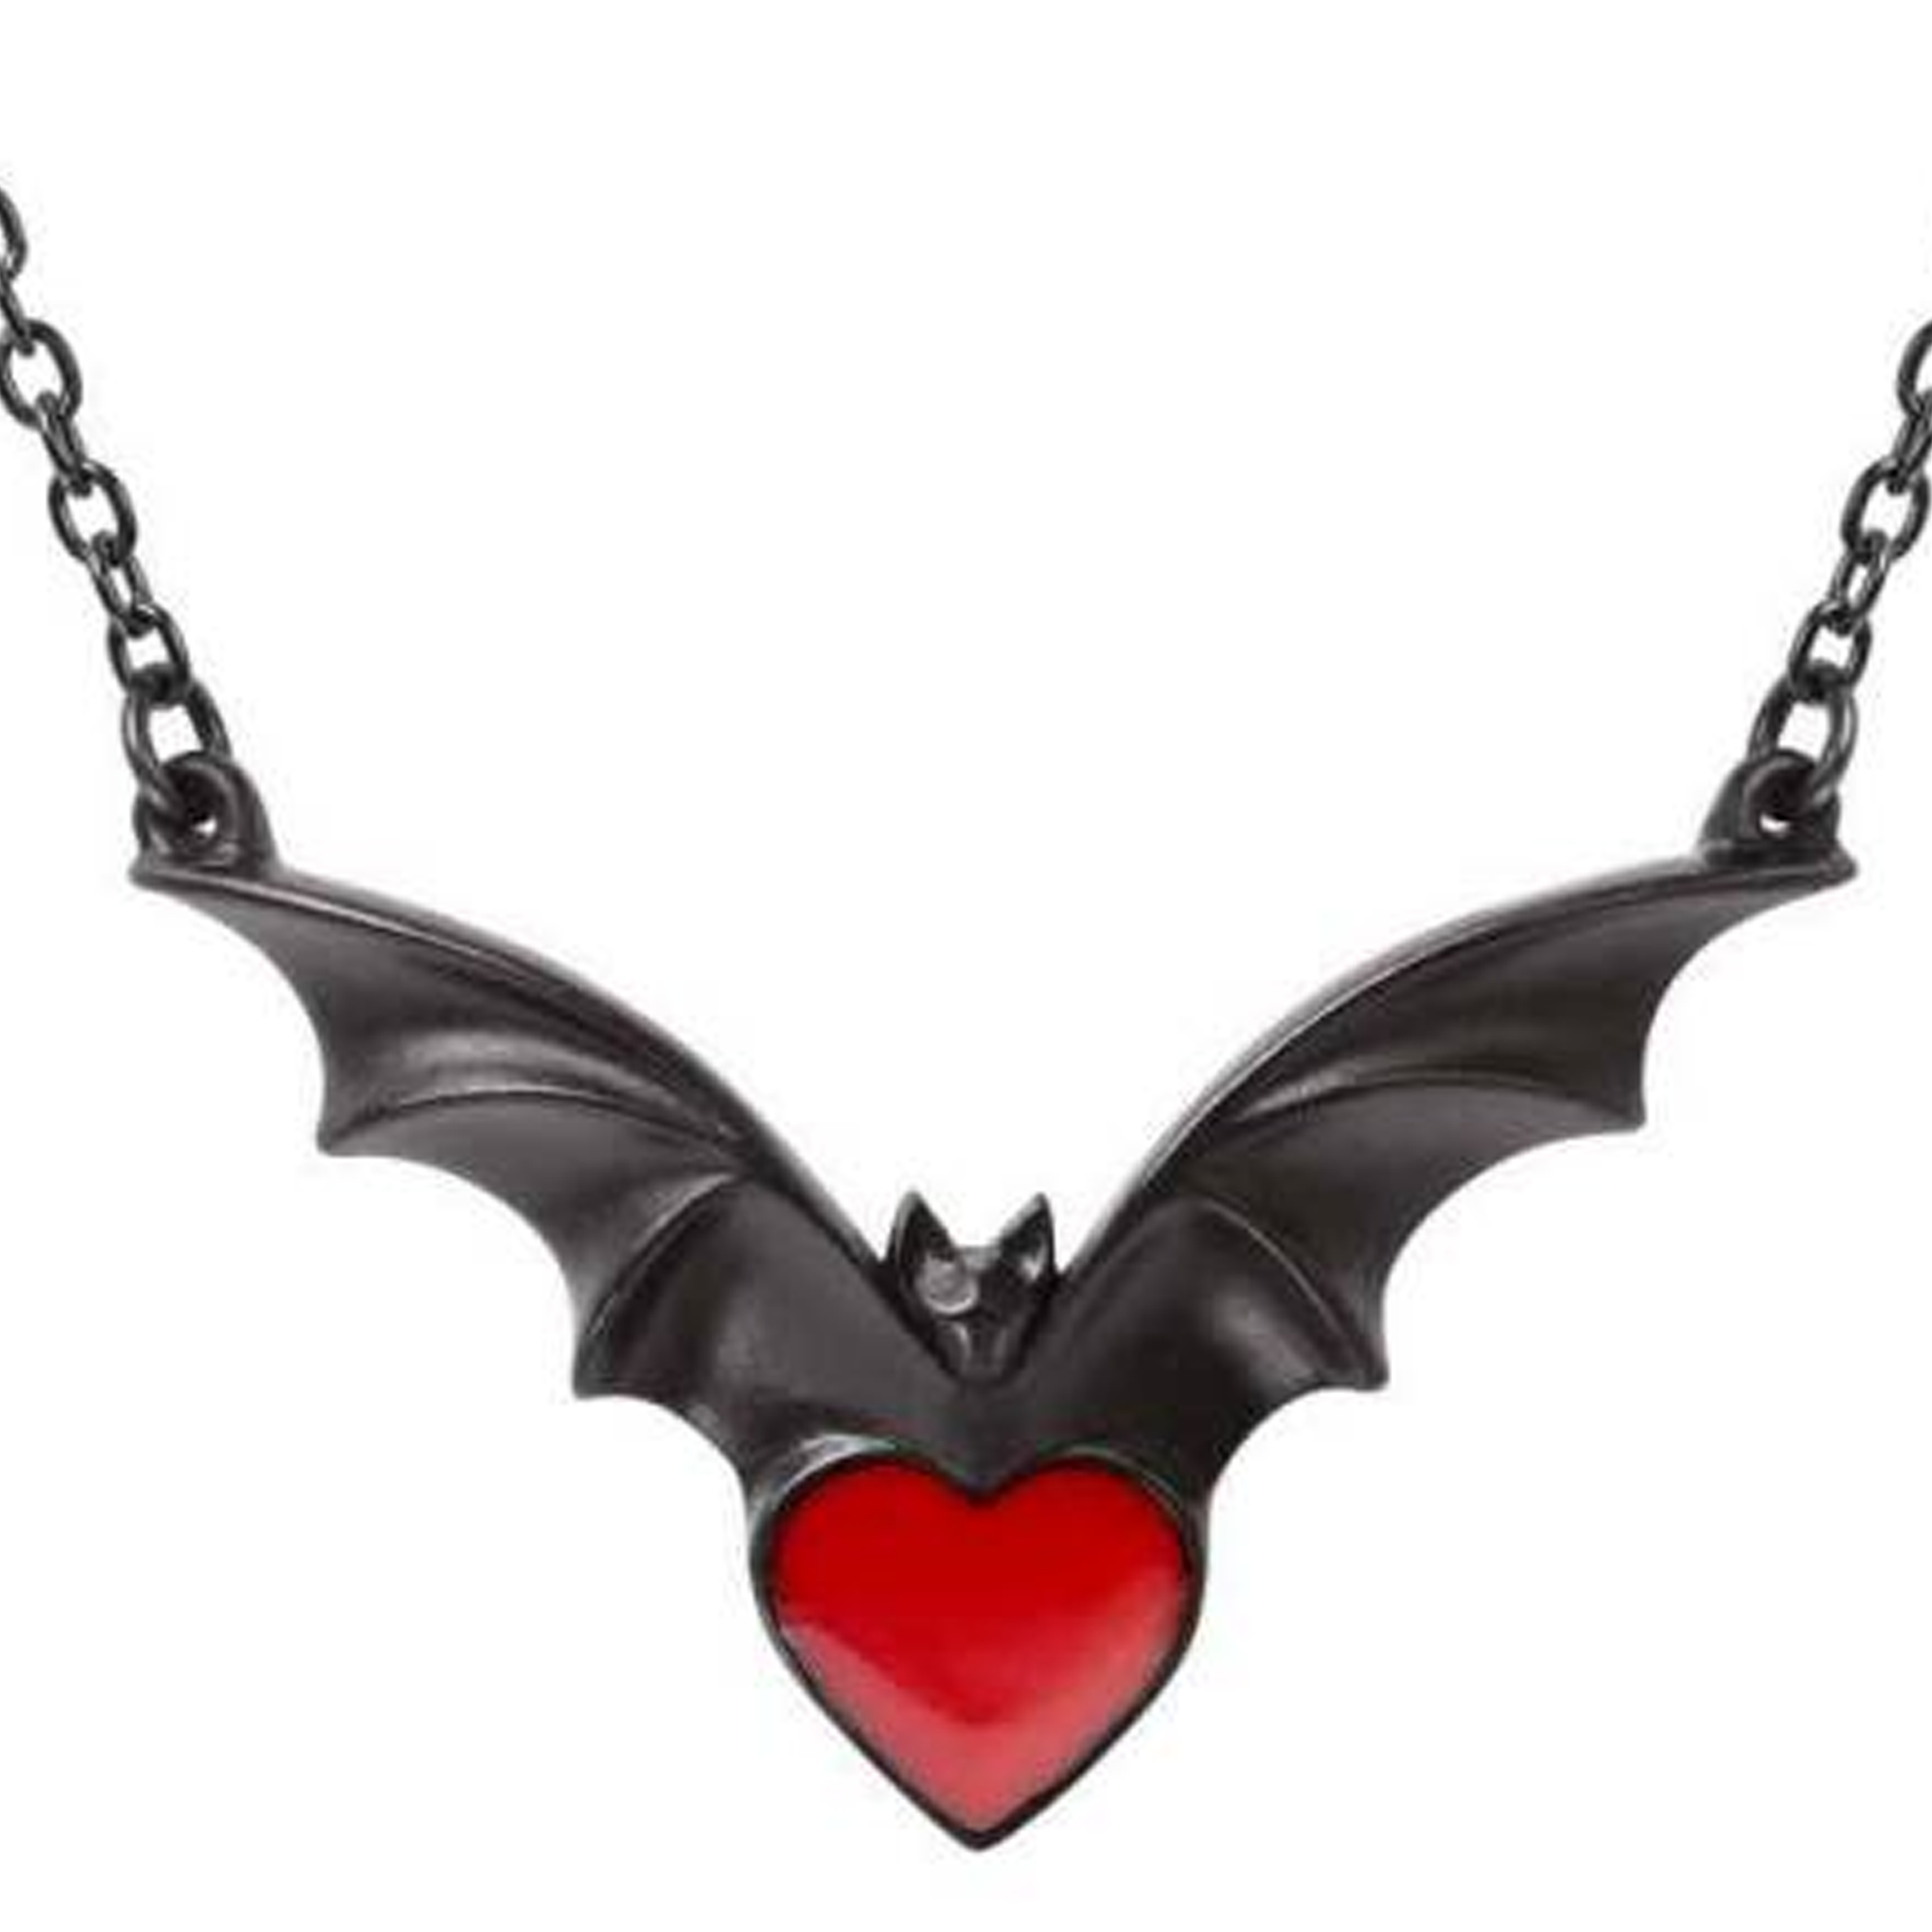 Sombre Desire - Black Bat & Heart Pewter Pendant | Happy Piranha